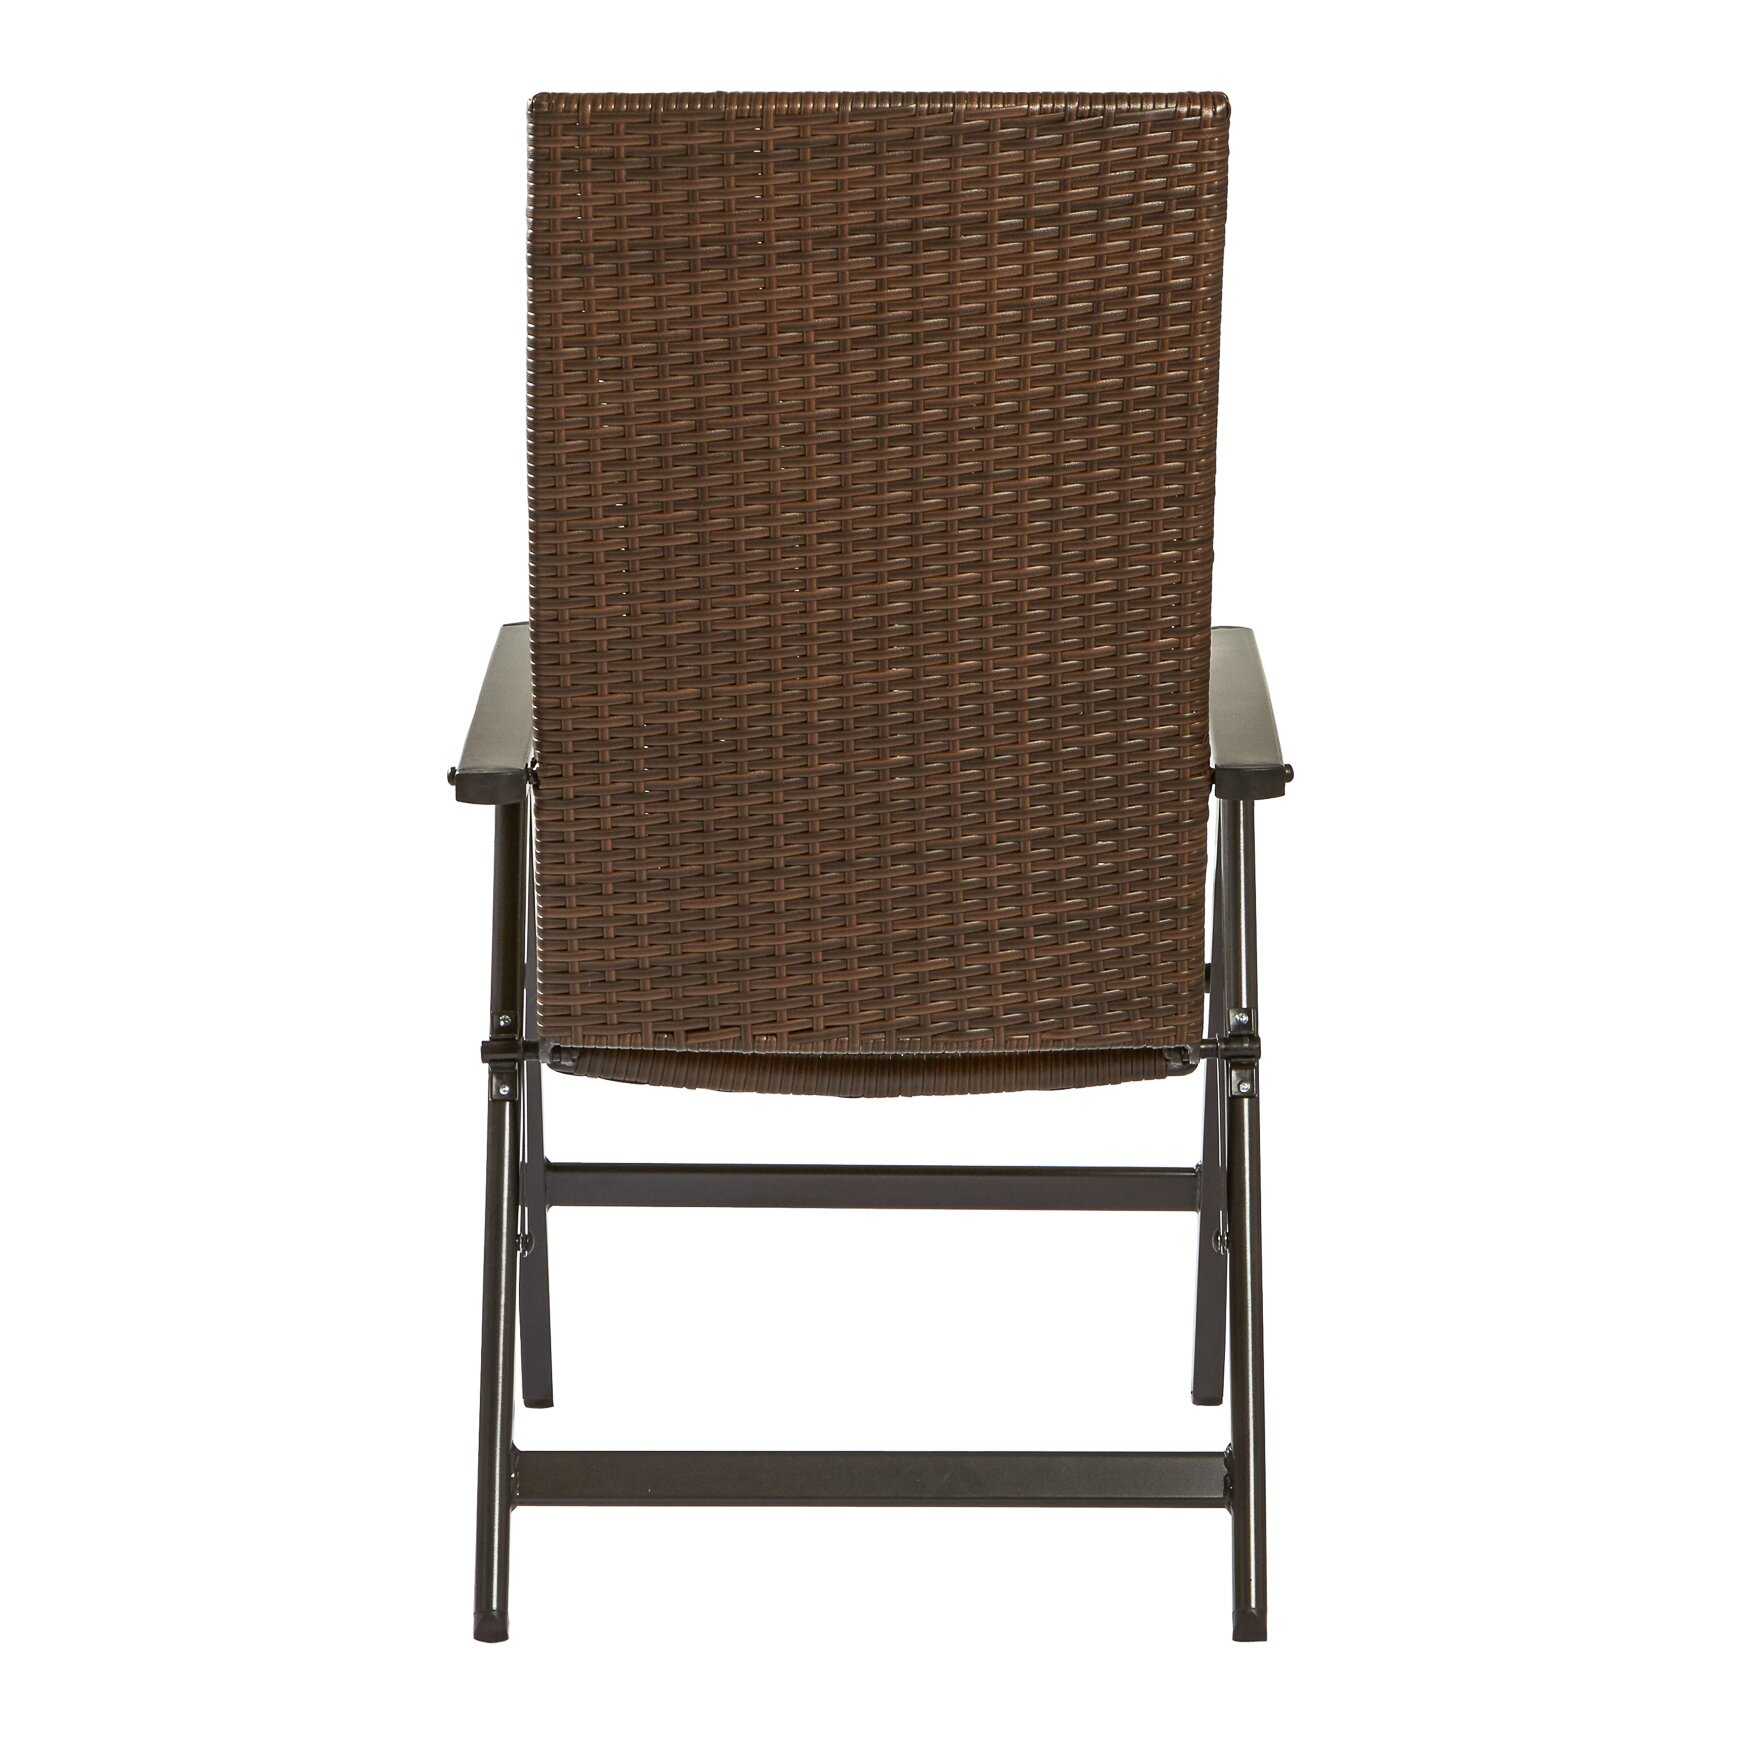 Wayfair Reclining Garden Chair / Greendale Home Fashions Wicker Outdoor